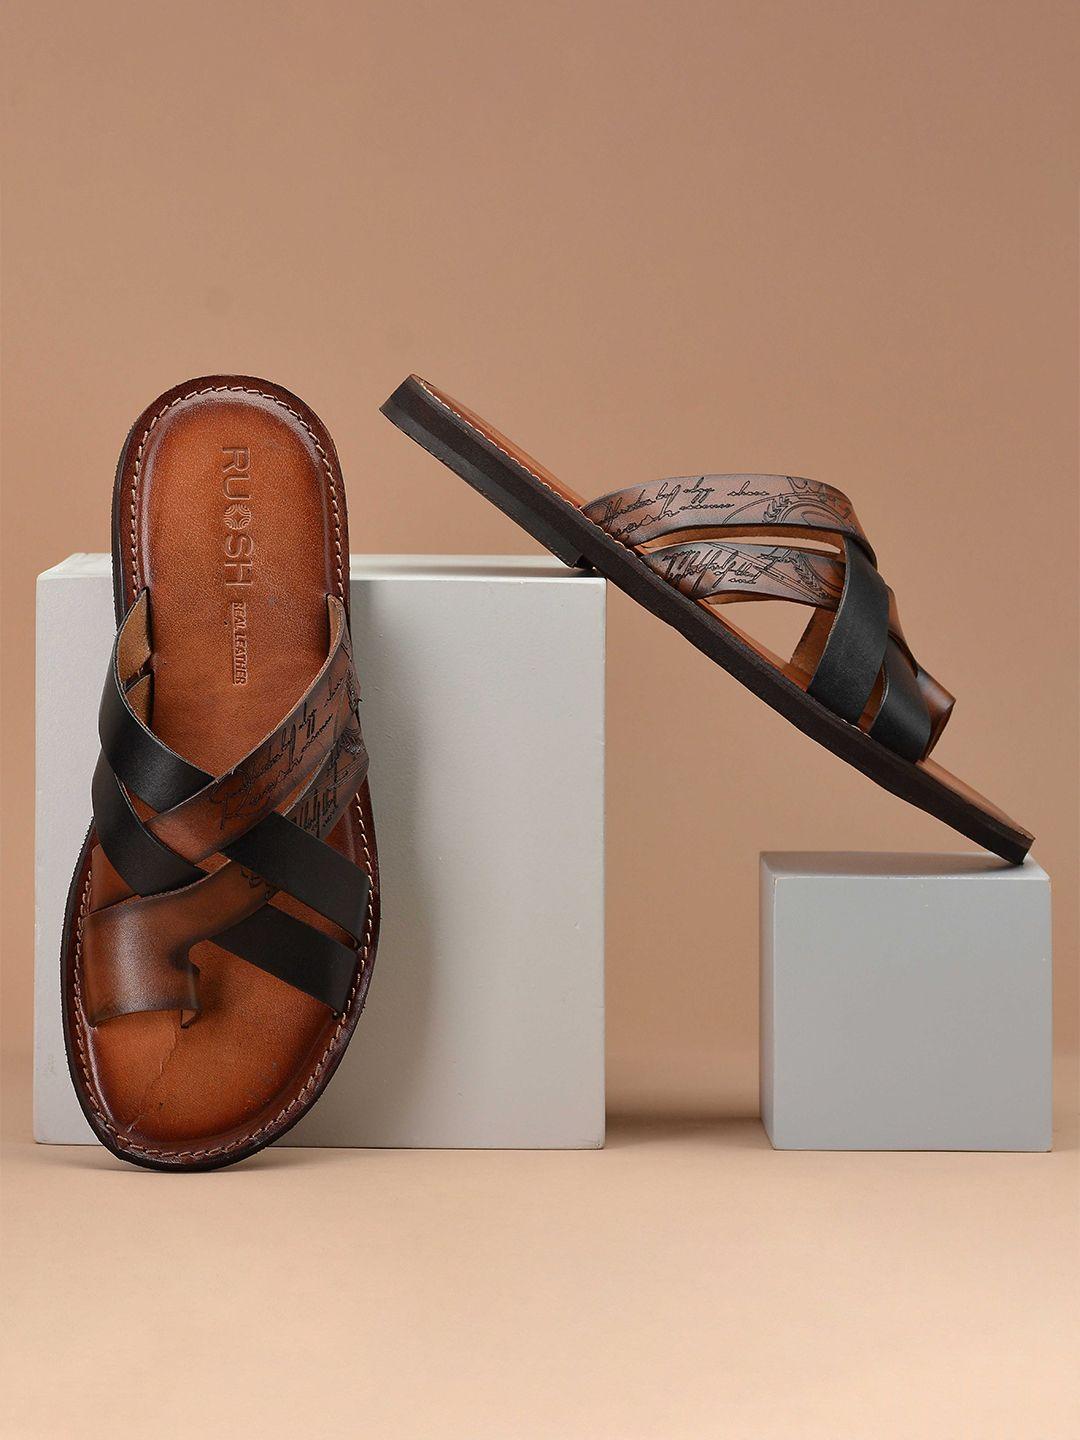 Ruosh Men Open One Toe Leather Comfort Sandals